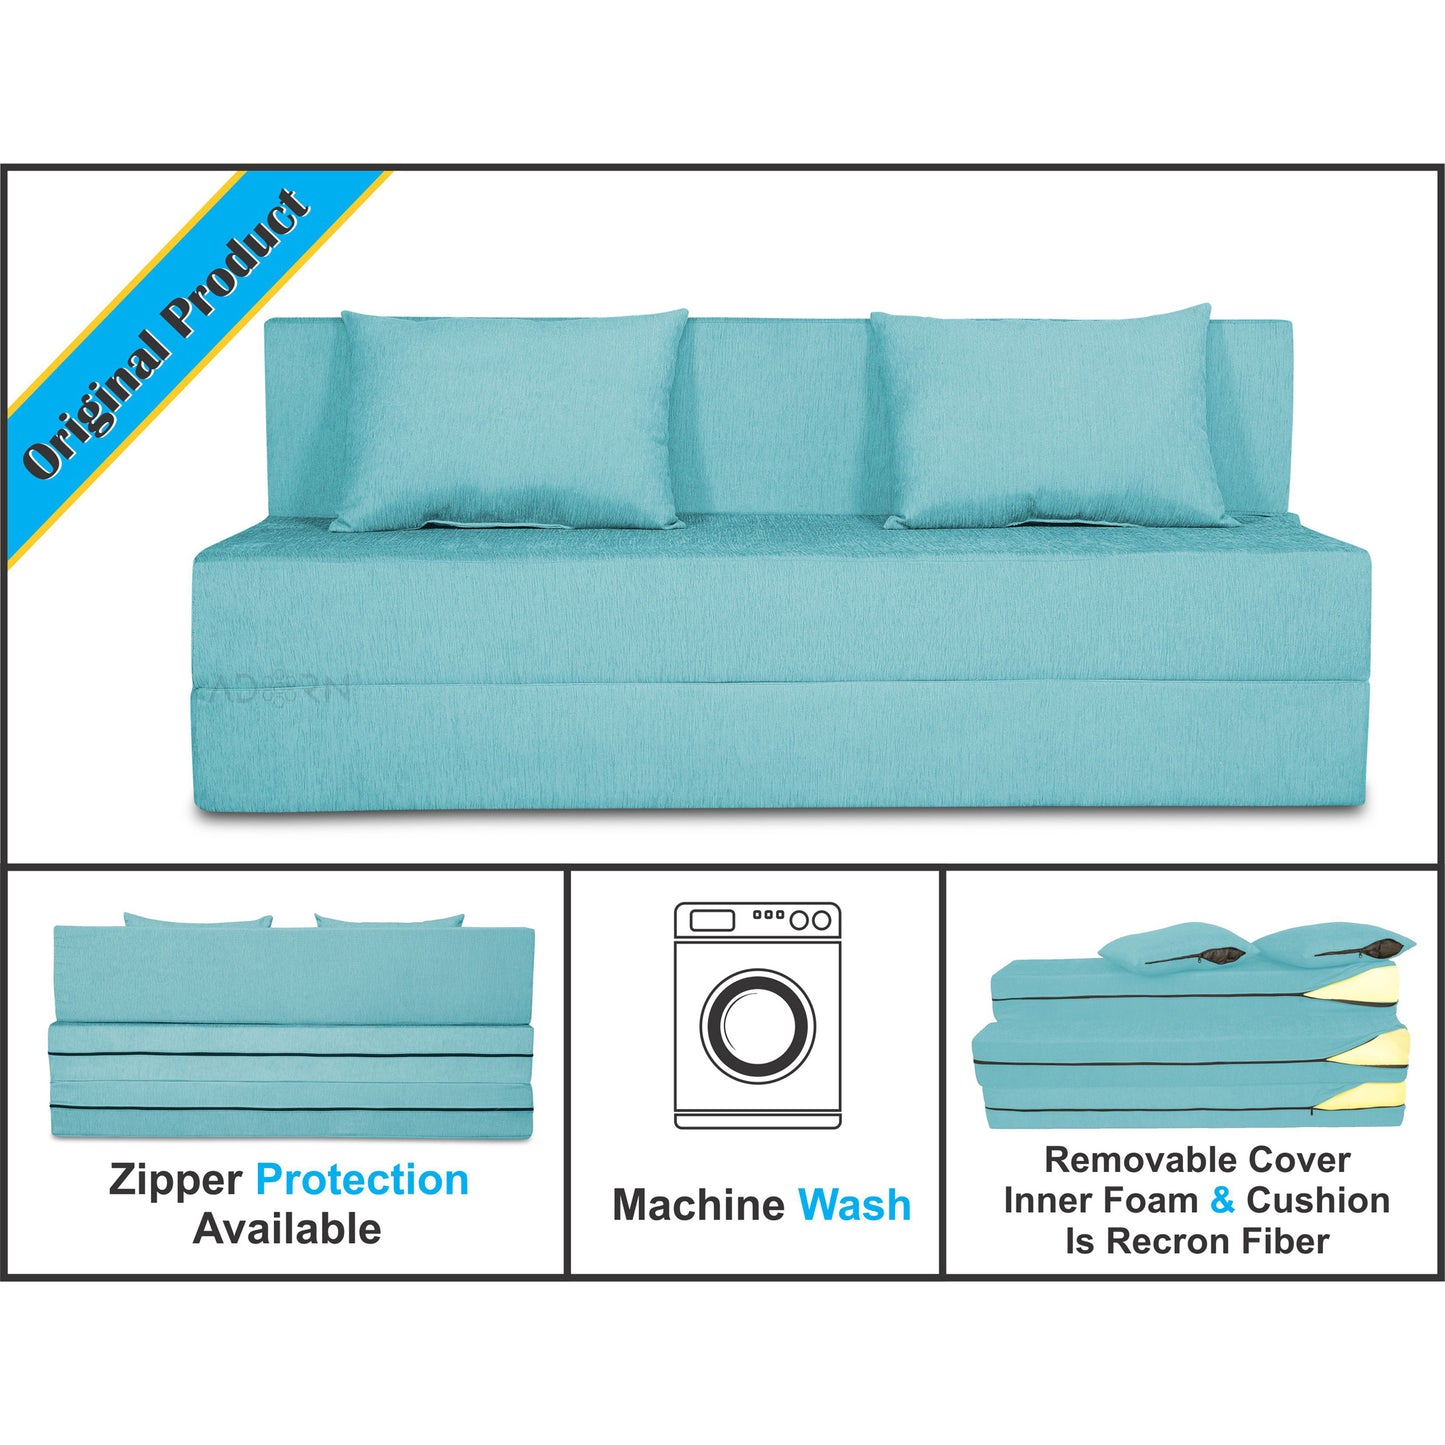 Adorn India Easy Three Seater Sofa Cum Bed Alyn 6'x 6' (Aqua Blue)